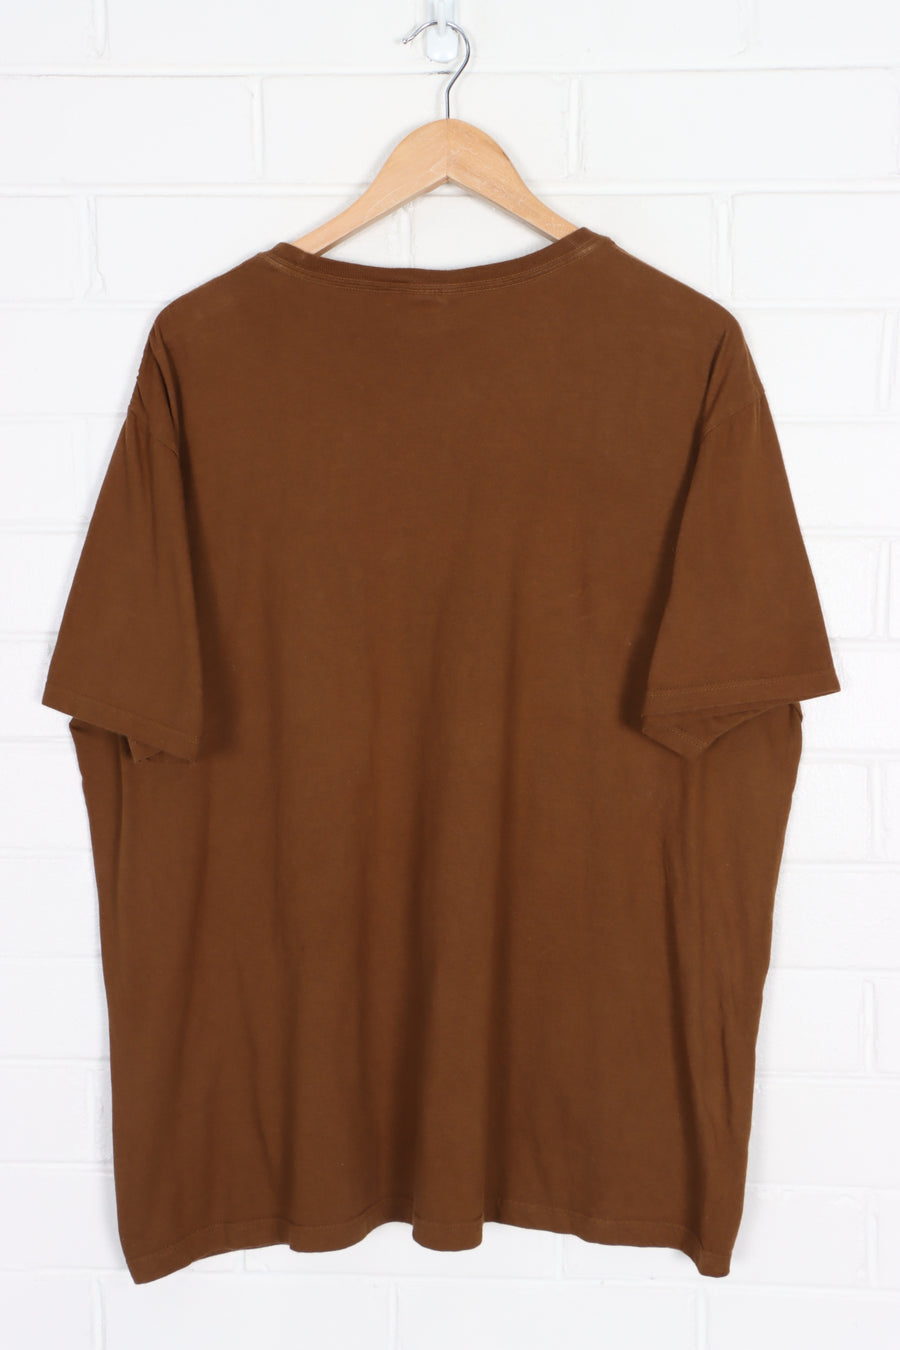 RALPH LAUREN POLO Embroidered Logo Oversize Brown T-Shirt (XL)